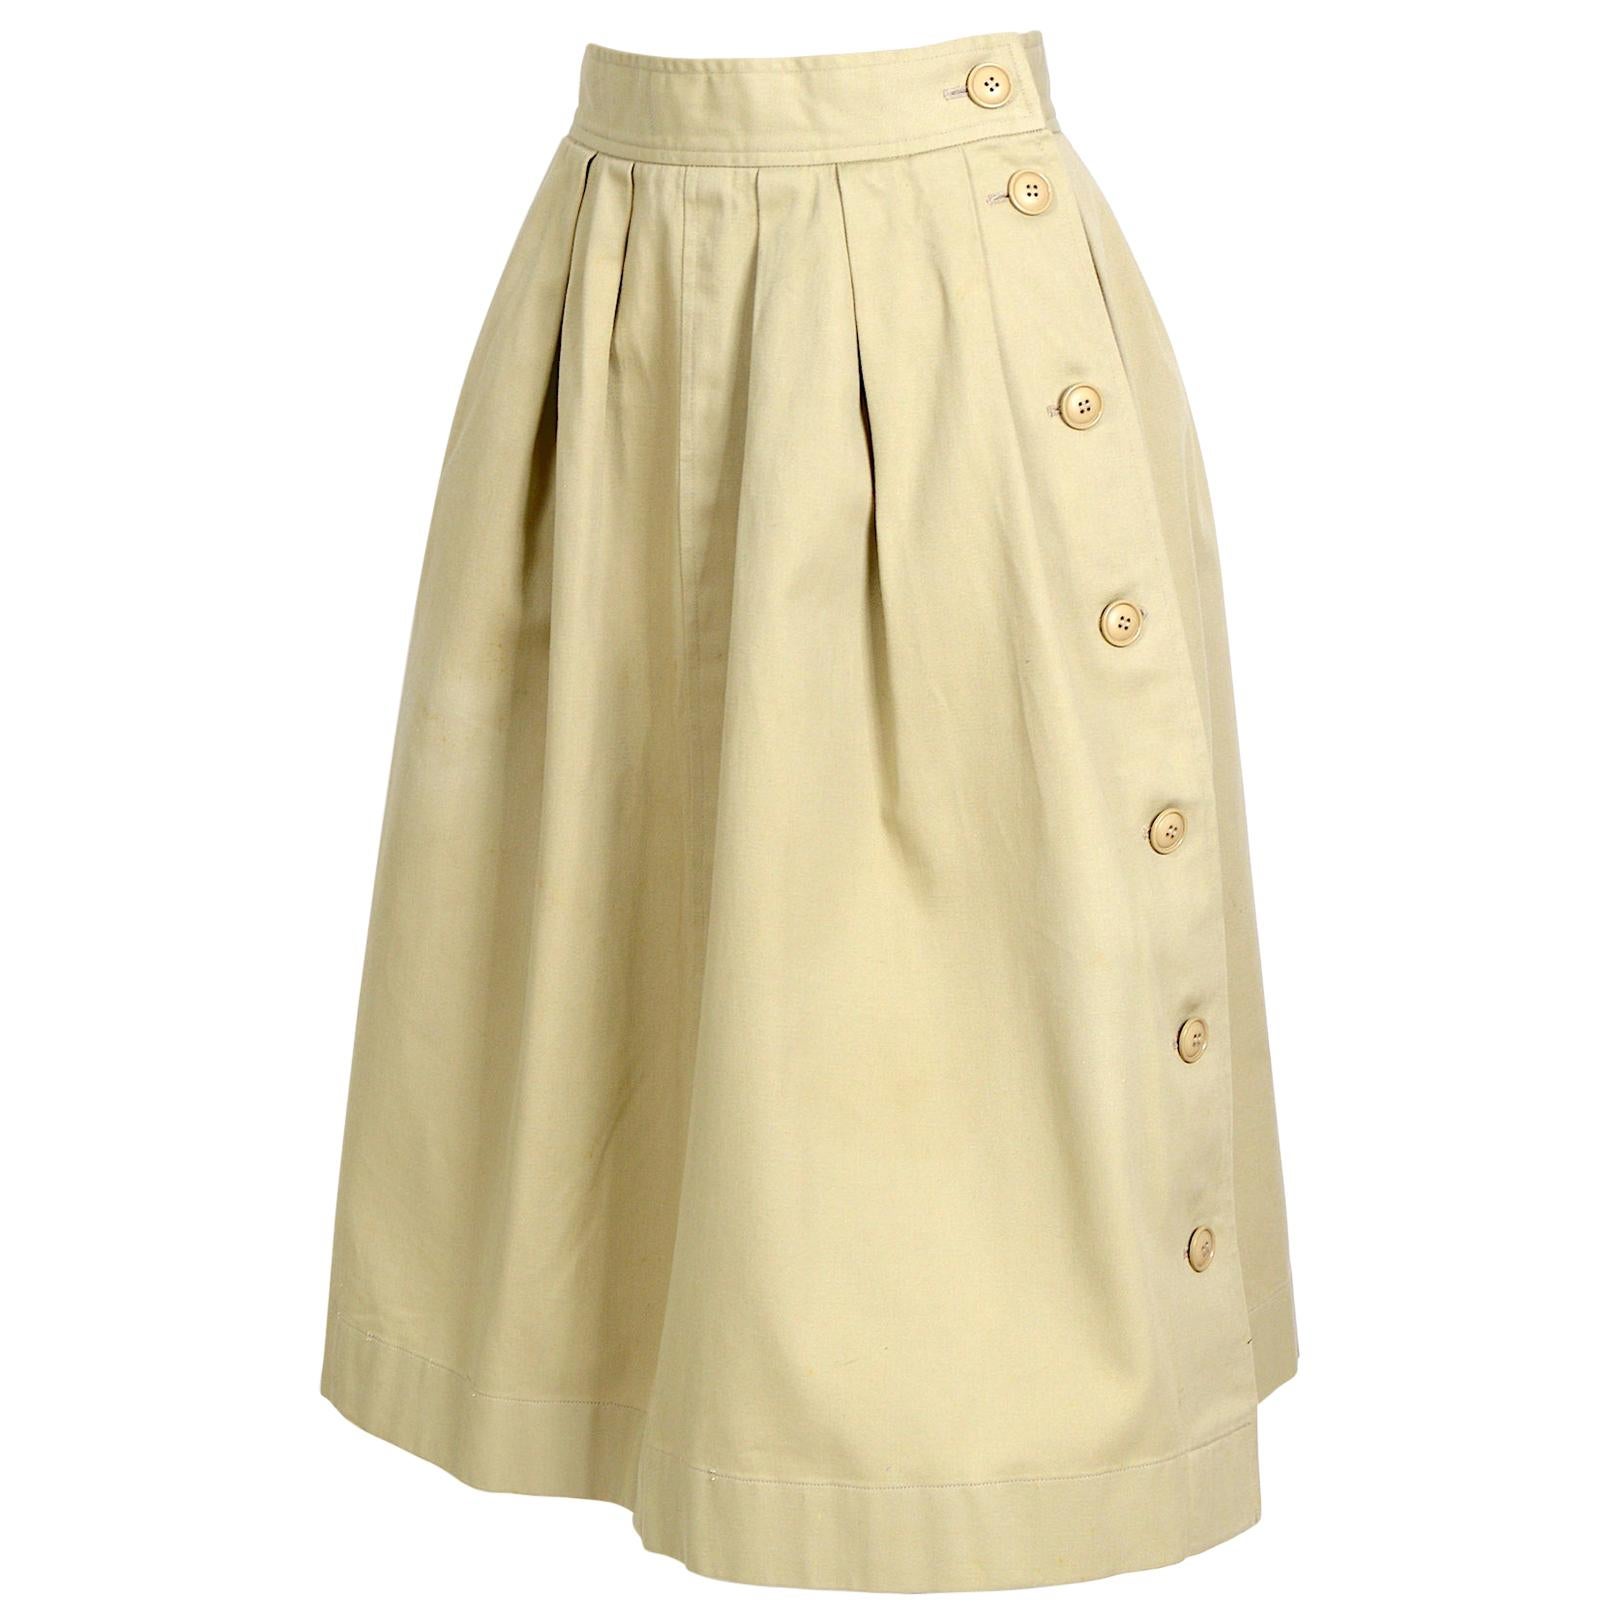 Yves Saint Laurent "rive gauche" vintage 1970s cotton safari skirt 